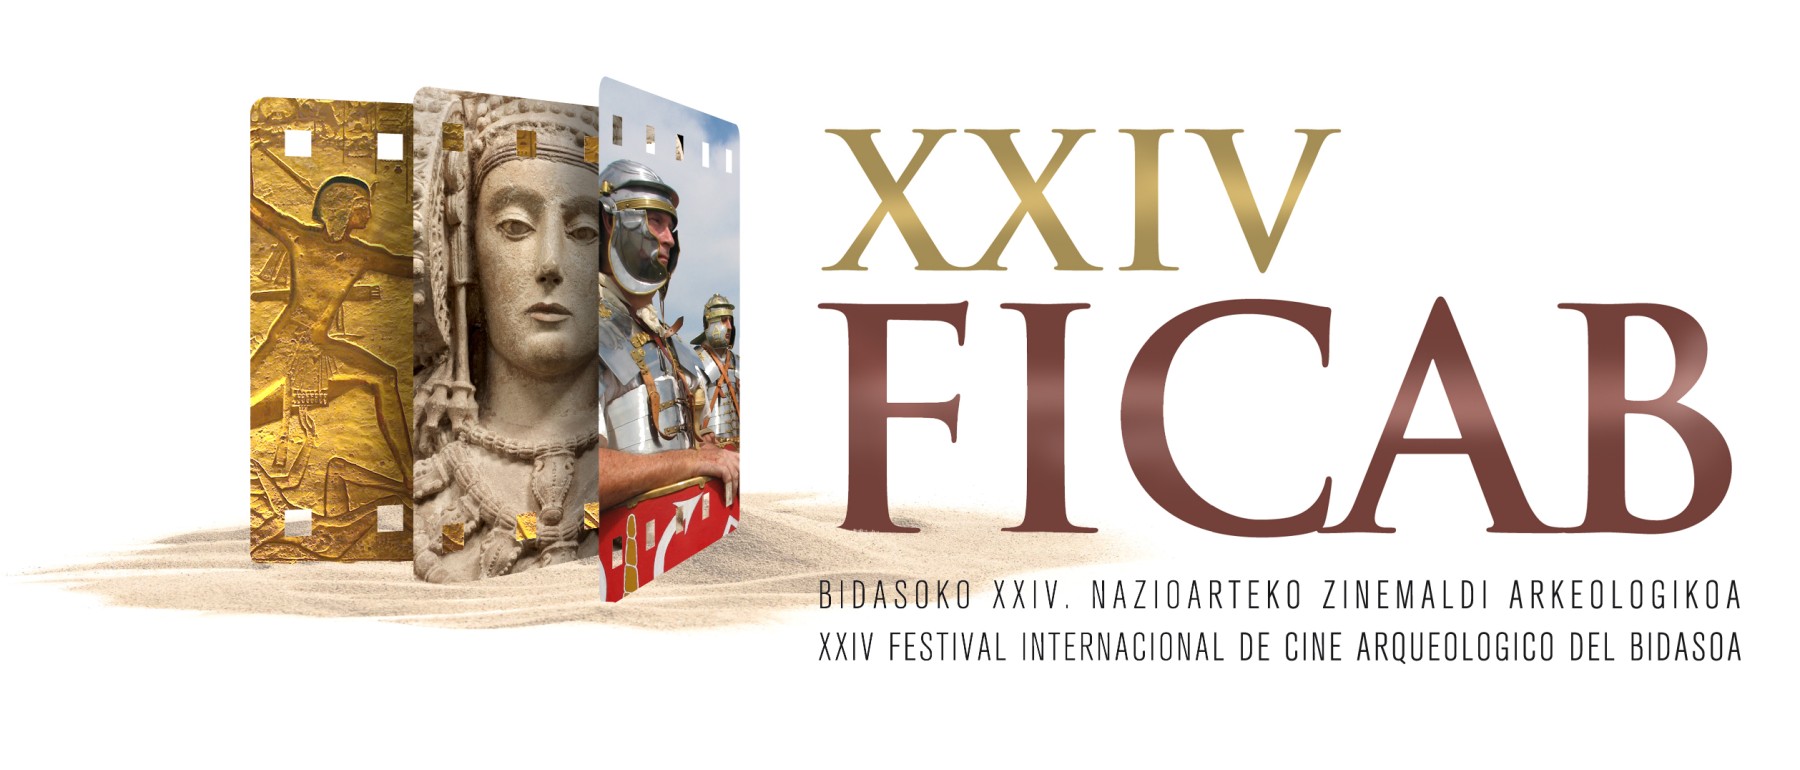 XXIV International Archaeological Film Festival of Bidasoa (Irun) inscription is open